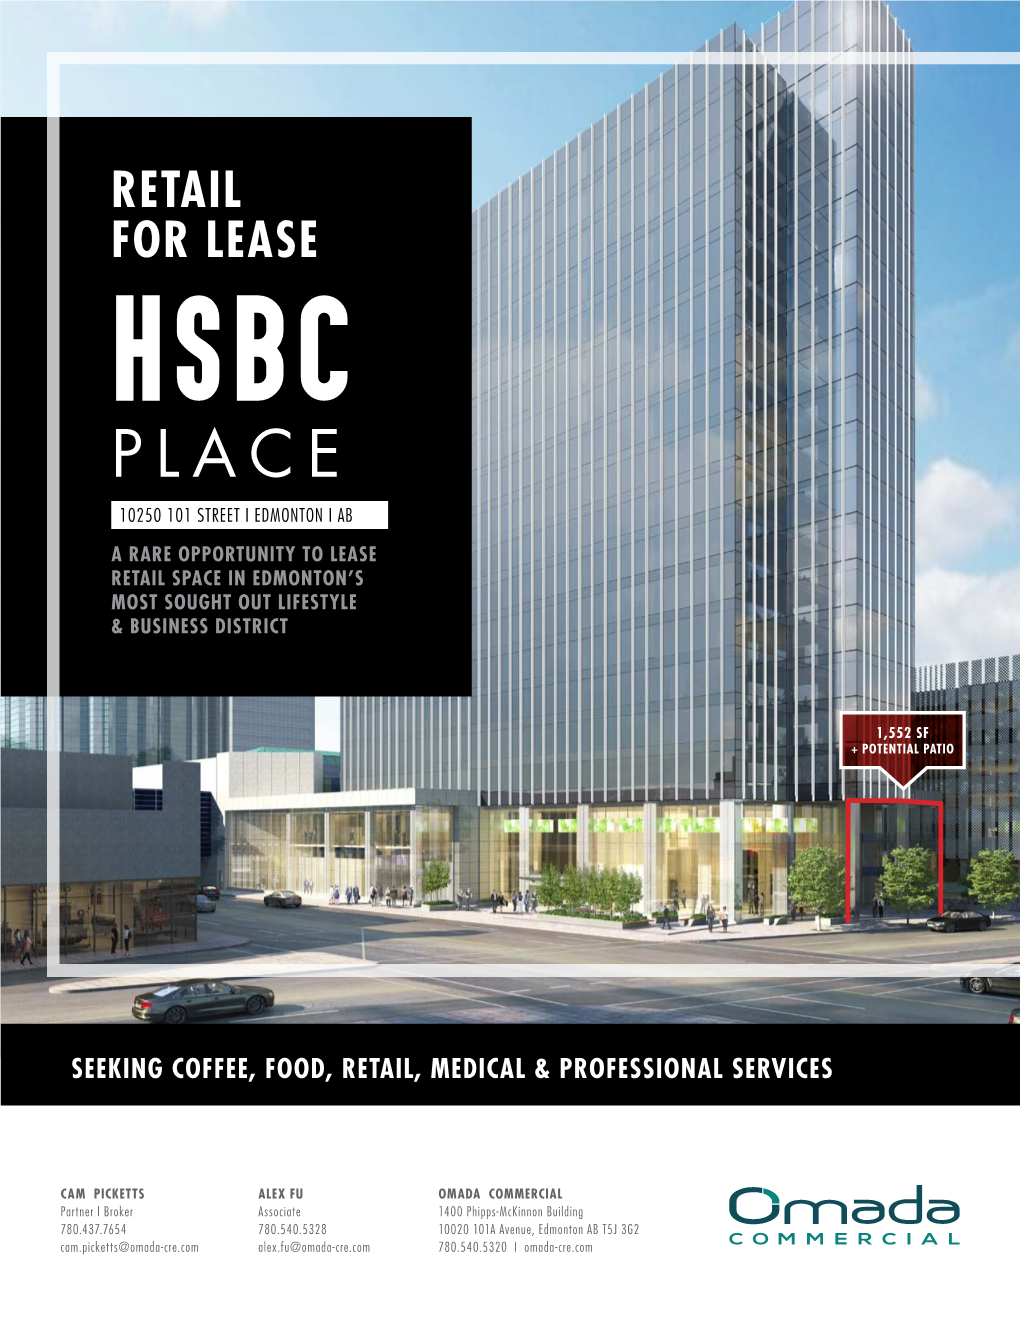 Retail for Lease Hsbc Place 10250 101 Street I Edmonton I Ab